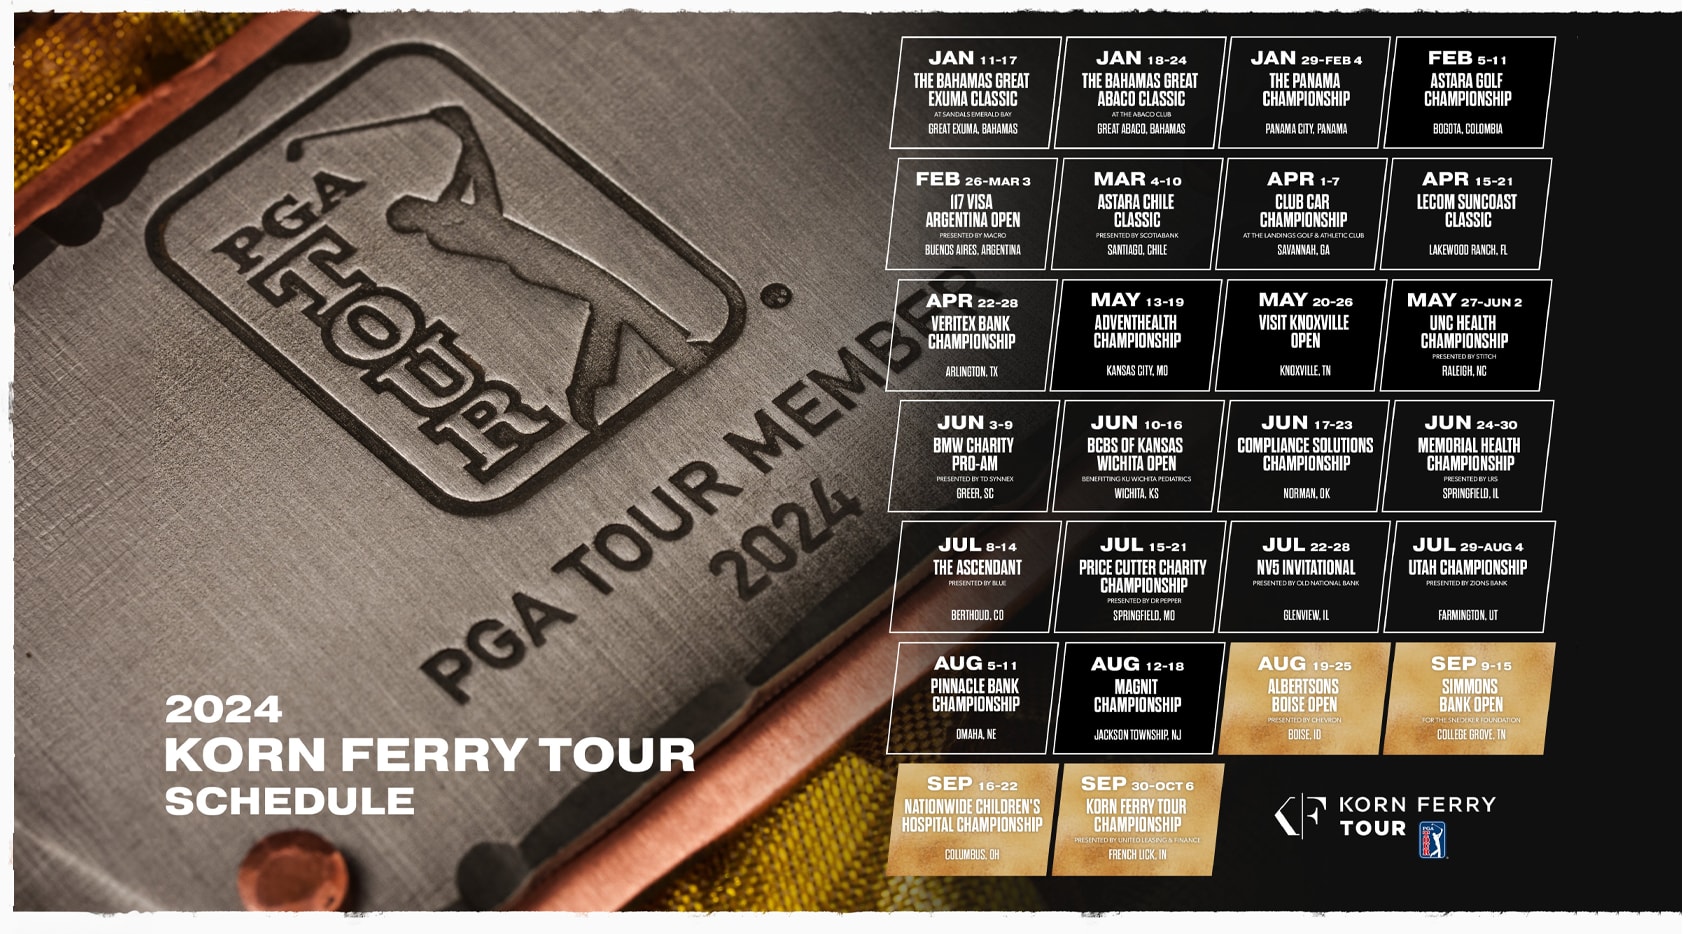 Korn Ferry Tour Schedule 2024 Leaderboard Selie Loutitia